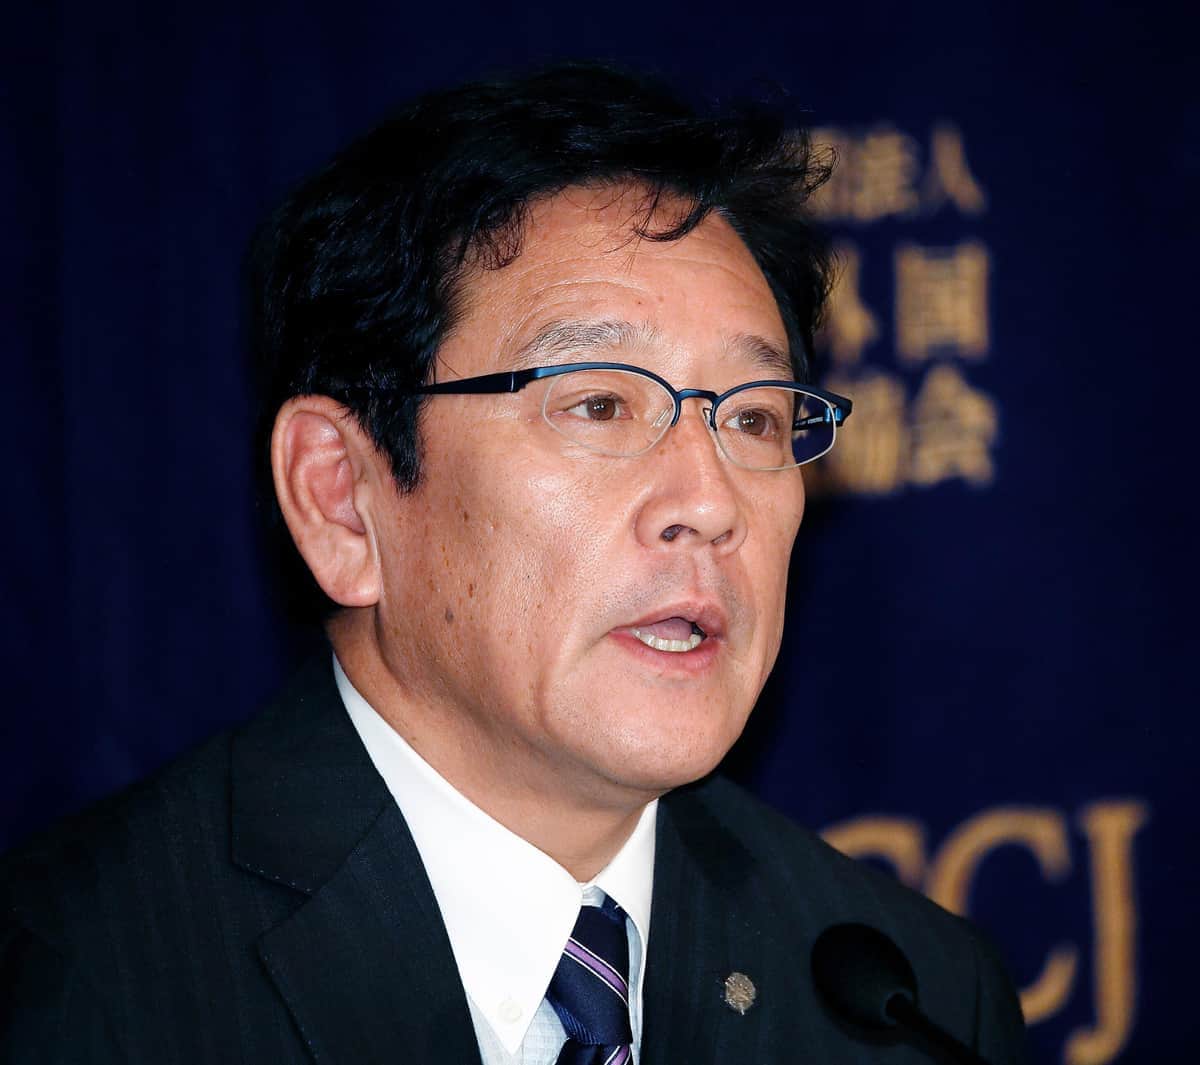 WBC侍ジャパンは「韓国に関心がなかった」　栗山監督「言及0回」に韓国メディア不満か